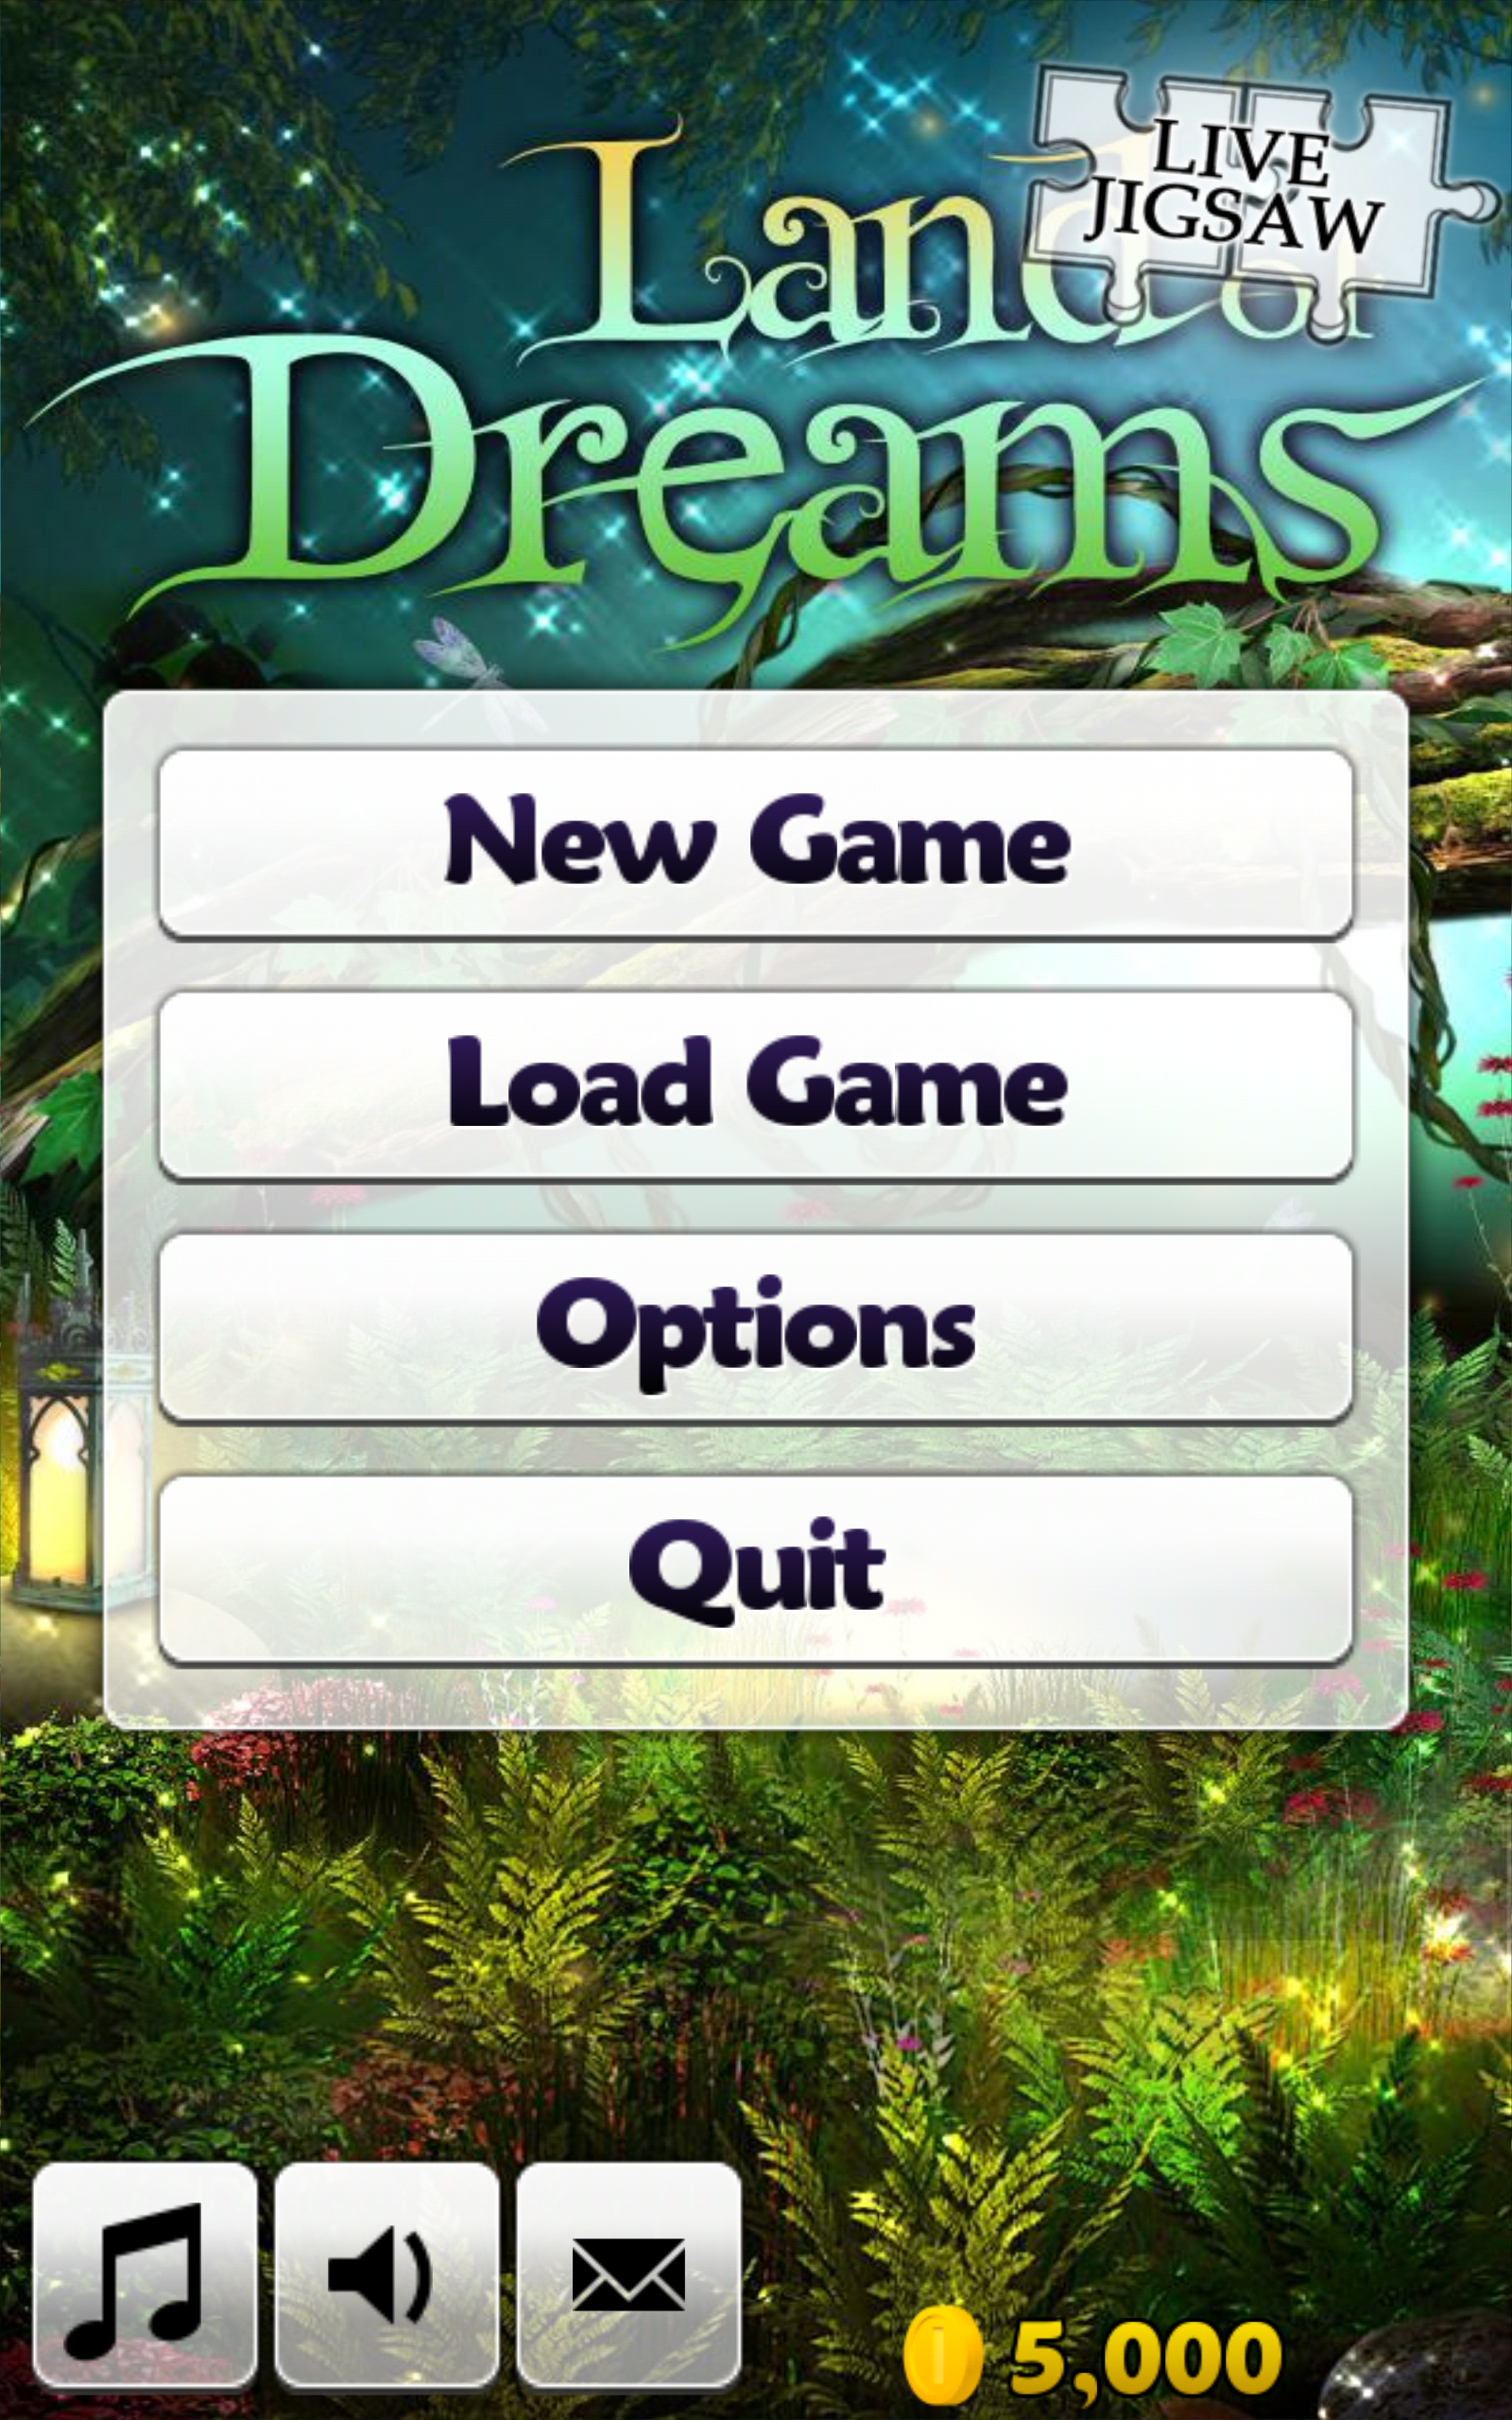 Android application Hidden Jigsaws: Land of Dreams screenshort